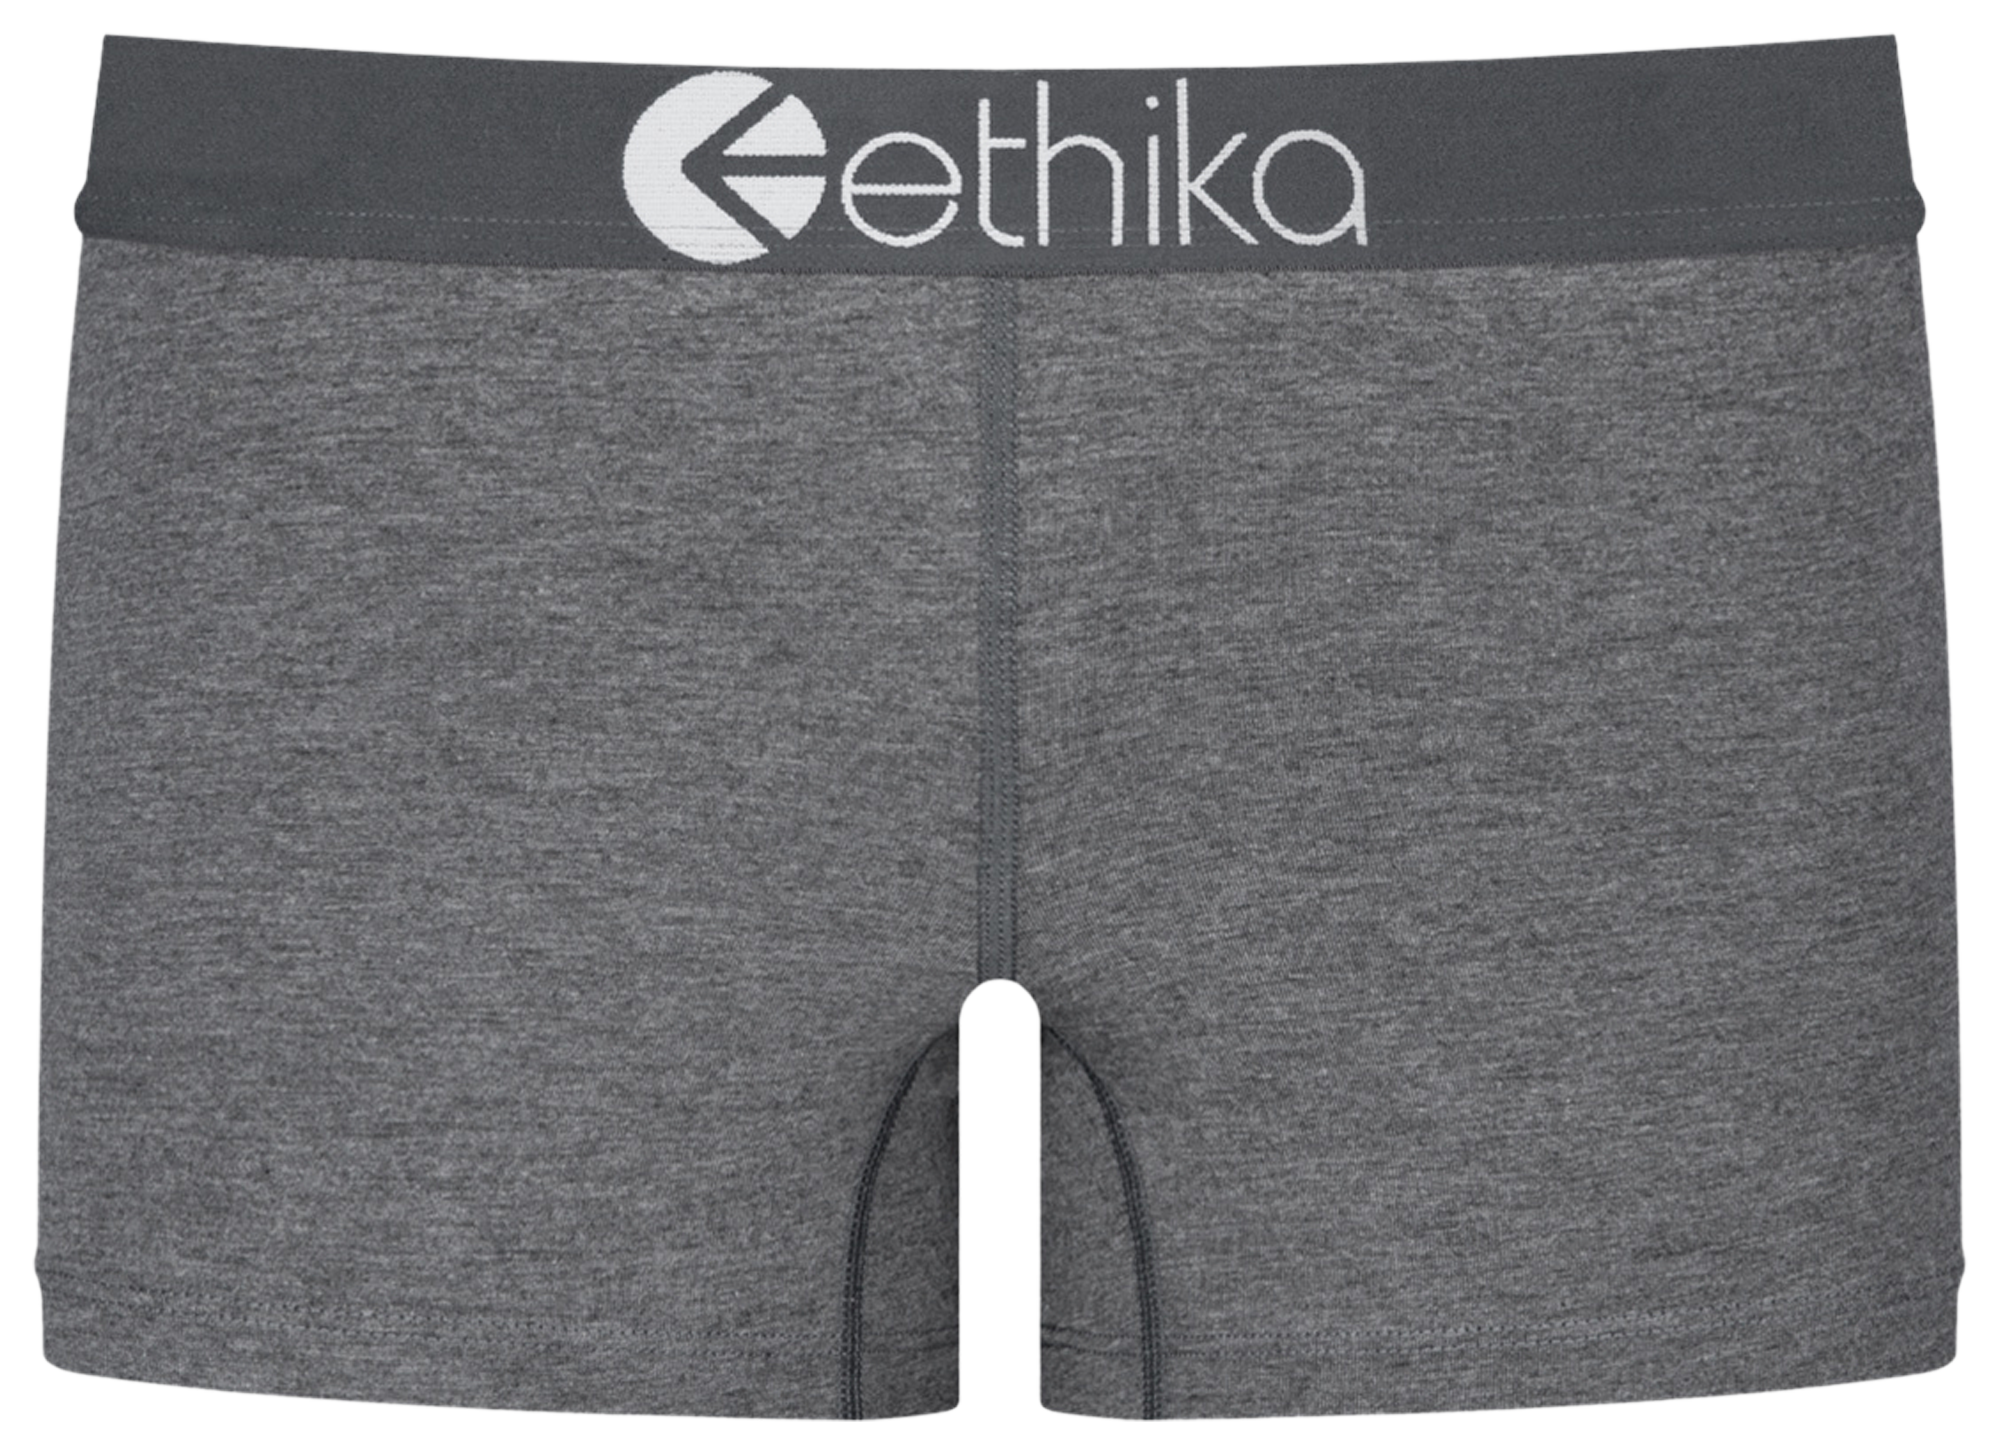 Ethika BMR Batik Underwear - Girls' Grade School